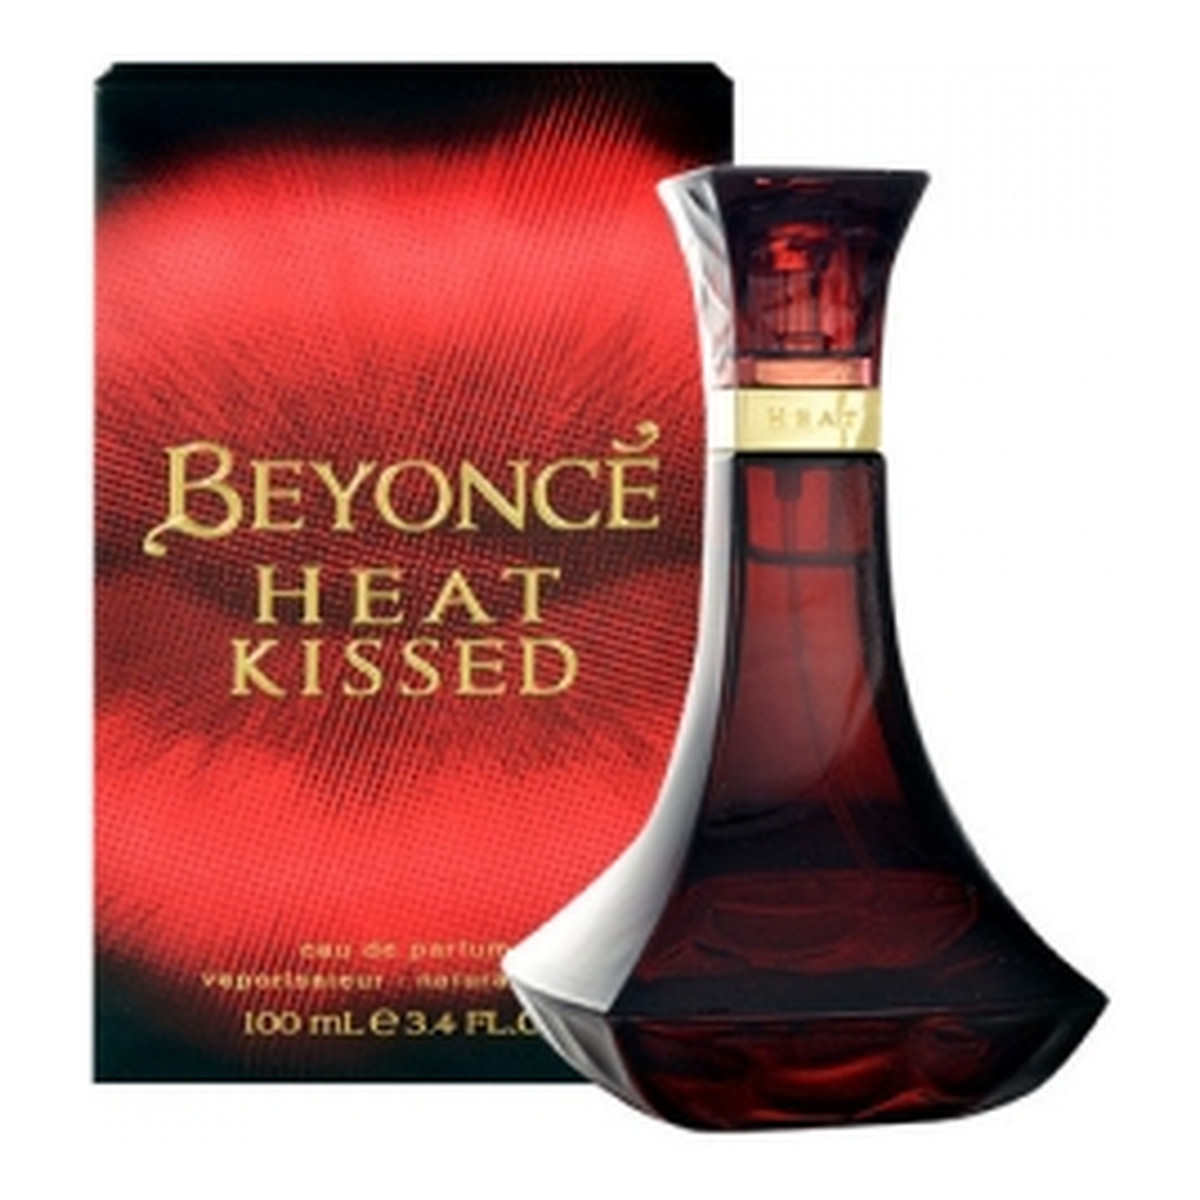 Beyonce Heat Kissed Woda Perfumowana 100ml